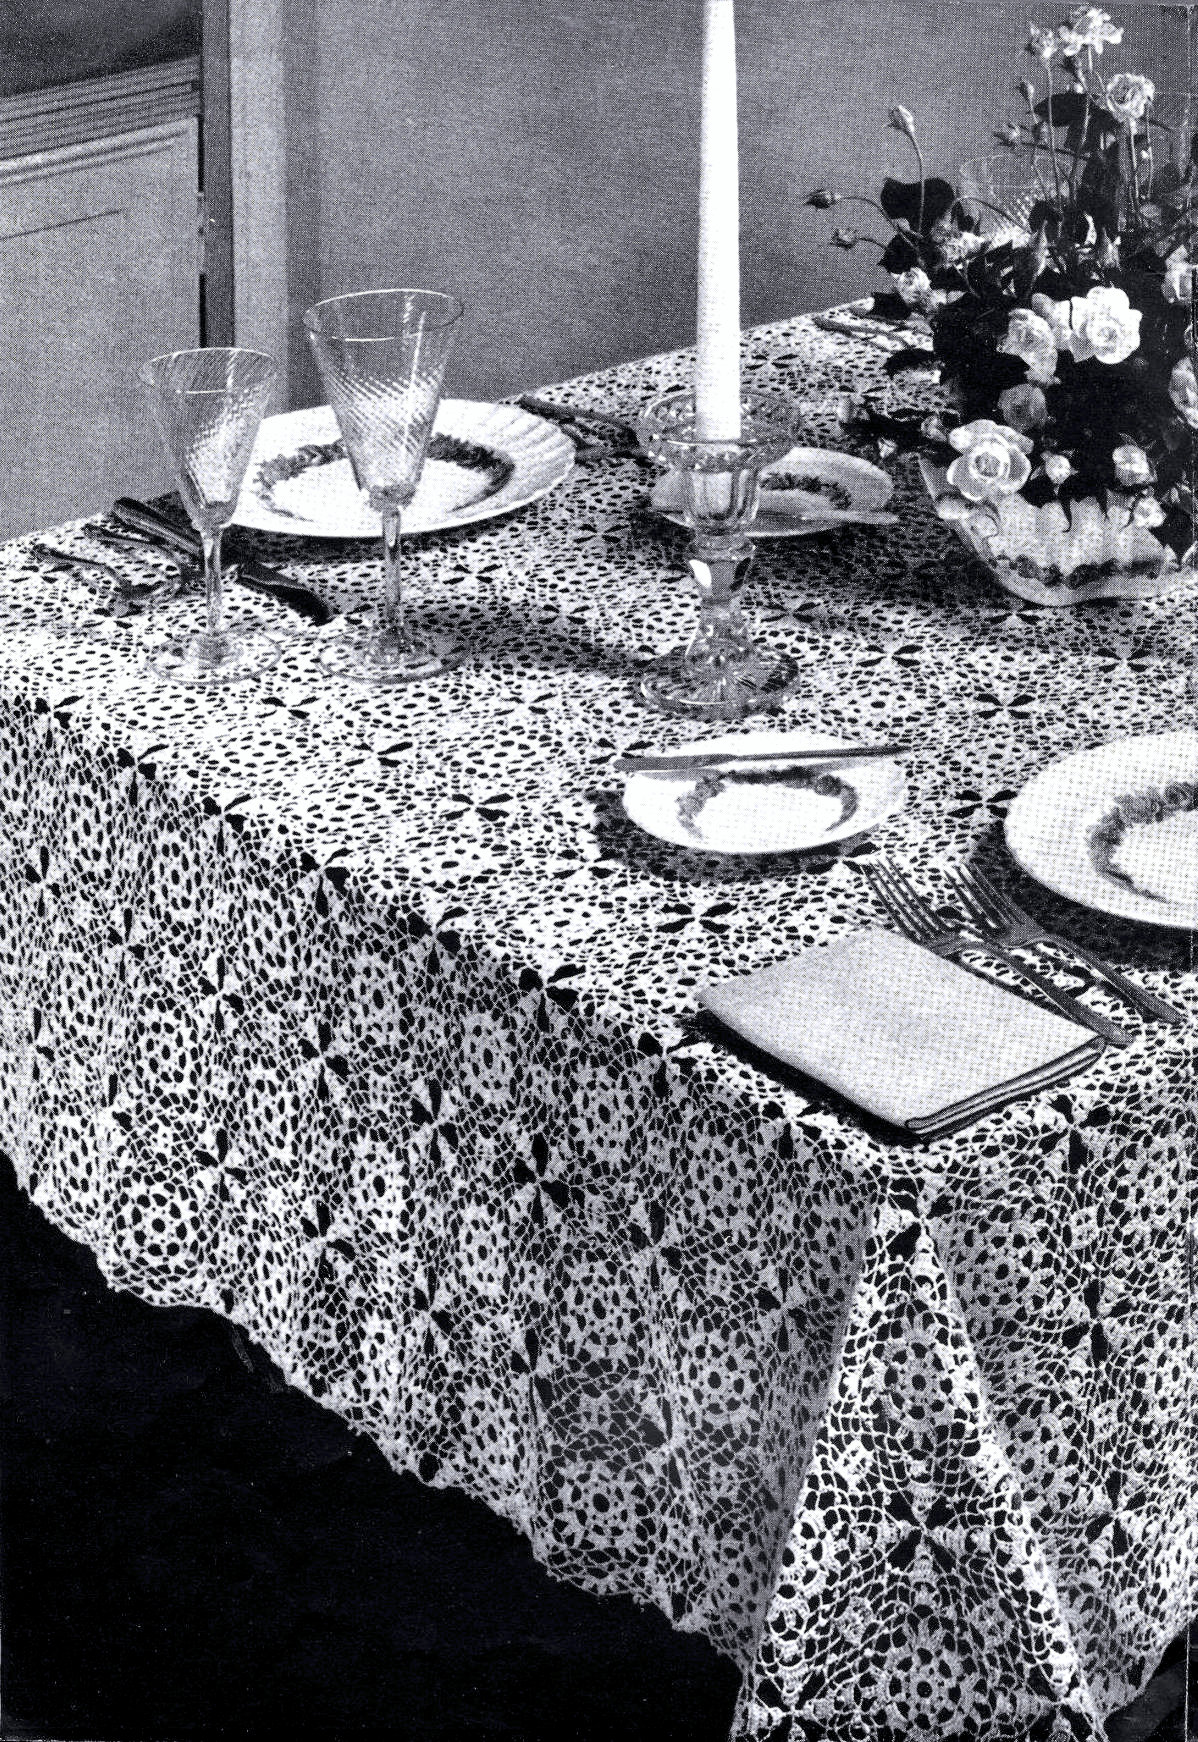 Aristocrat Tablecloth Pattern